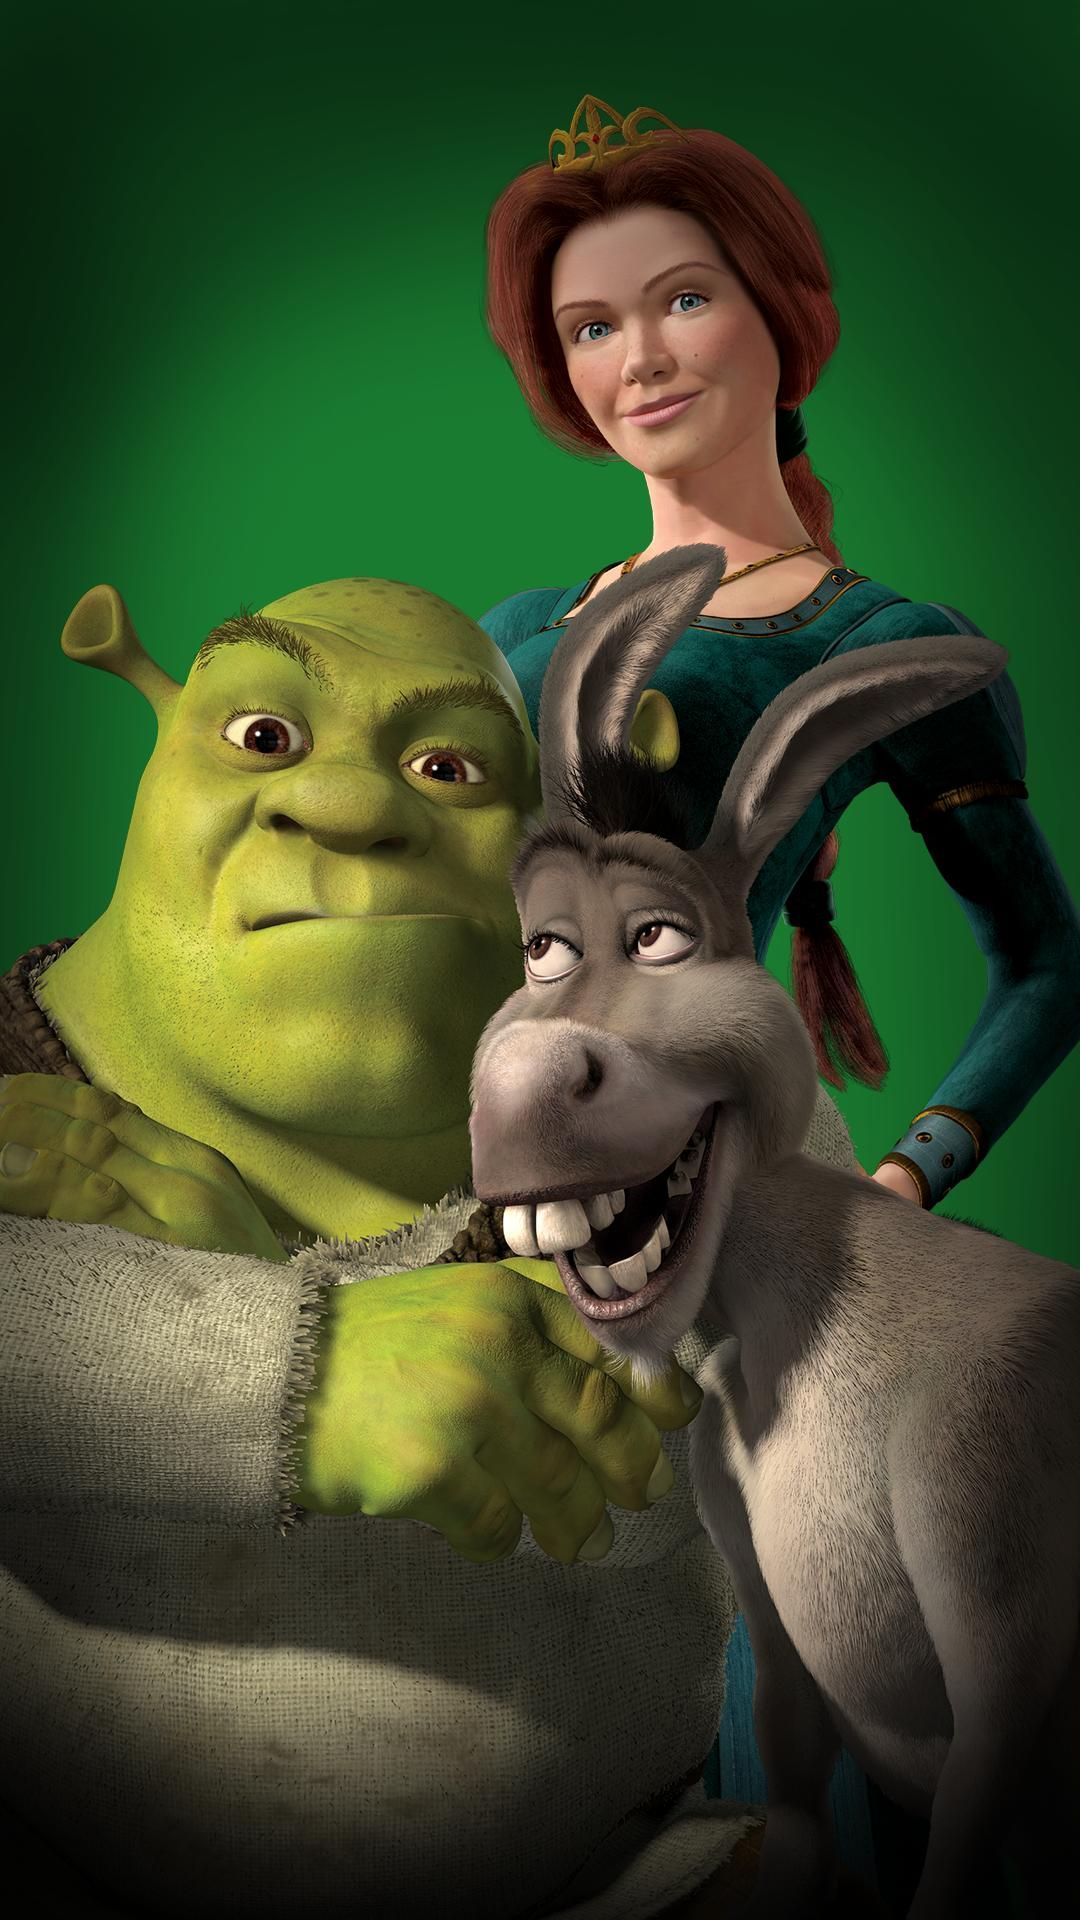 Background Shrek Wallpaper Discover more American, Animated, Comedy Film, Computer, Fantasy wallpaper.. Shrek, Animated movies, Shrek donkey